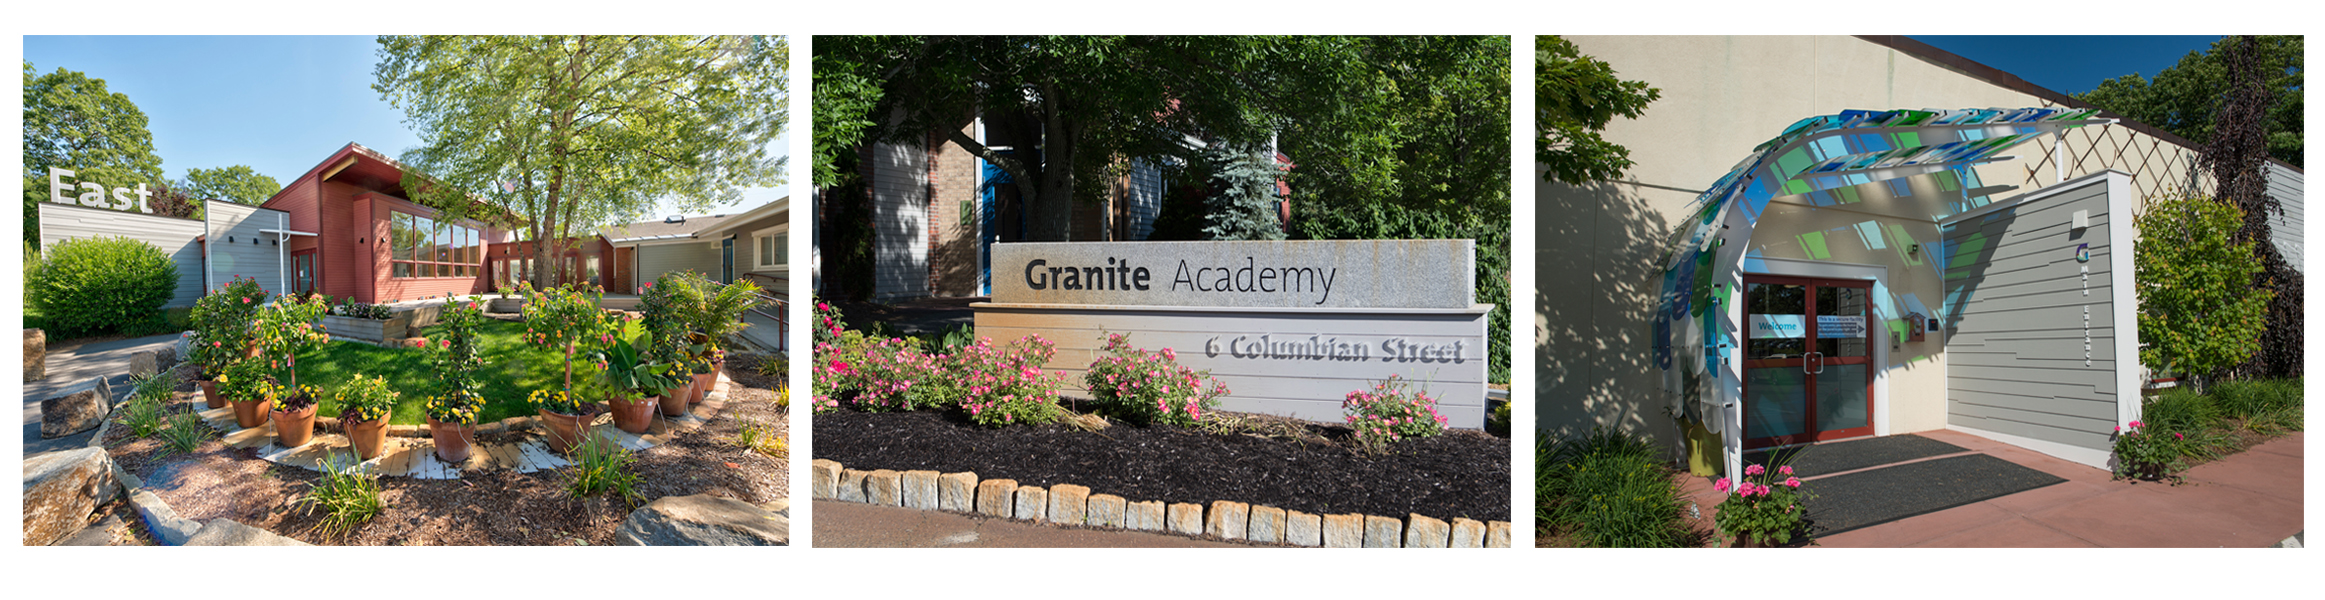 Granite Academy outside